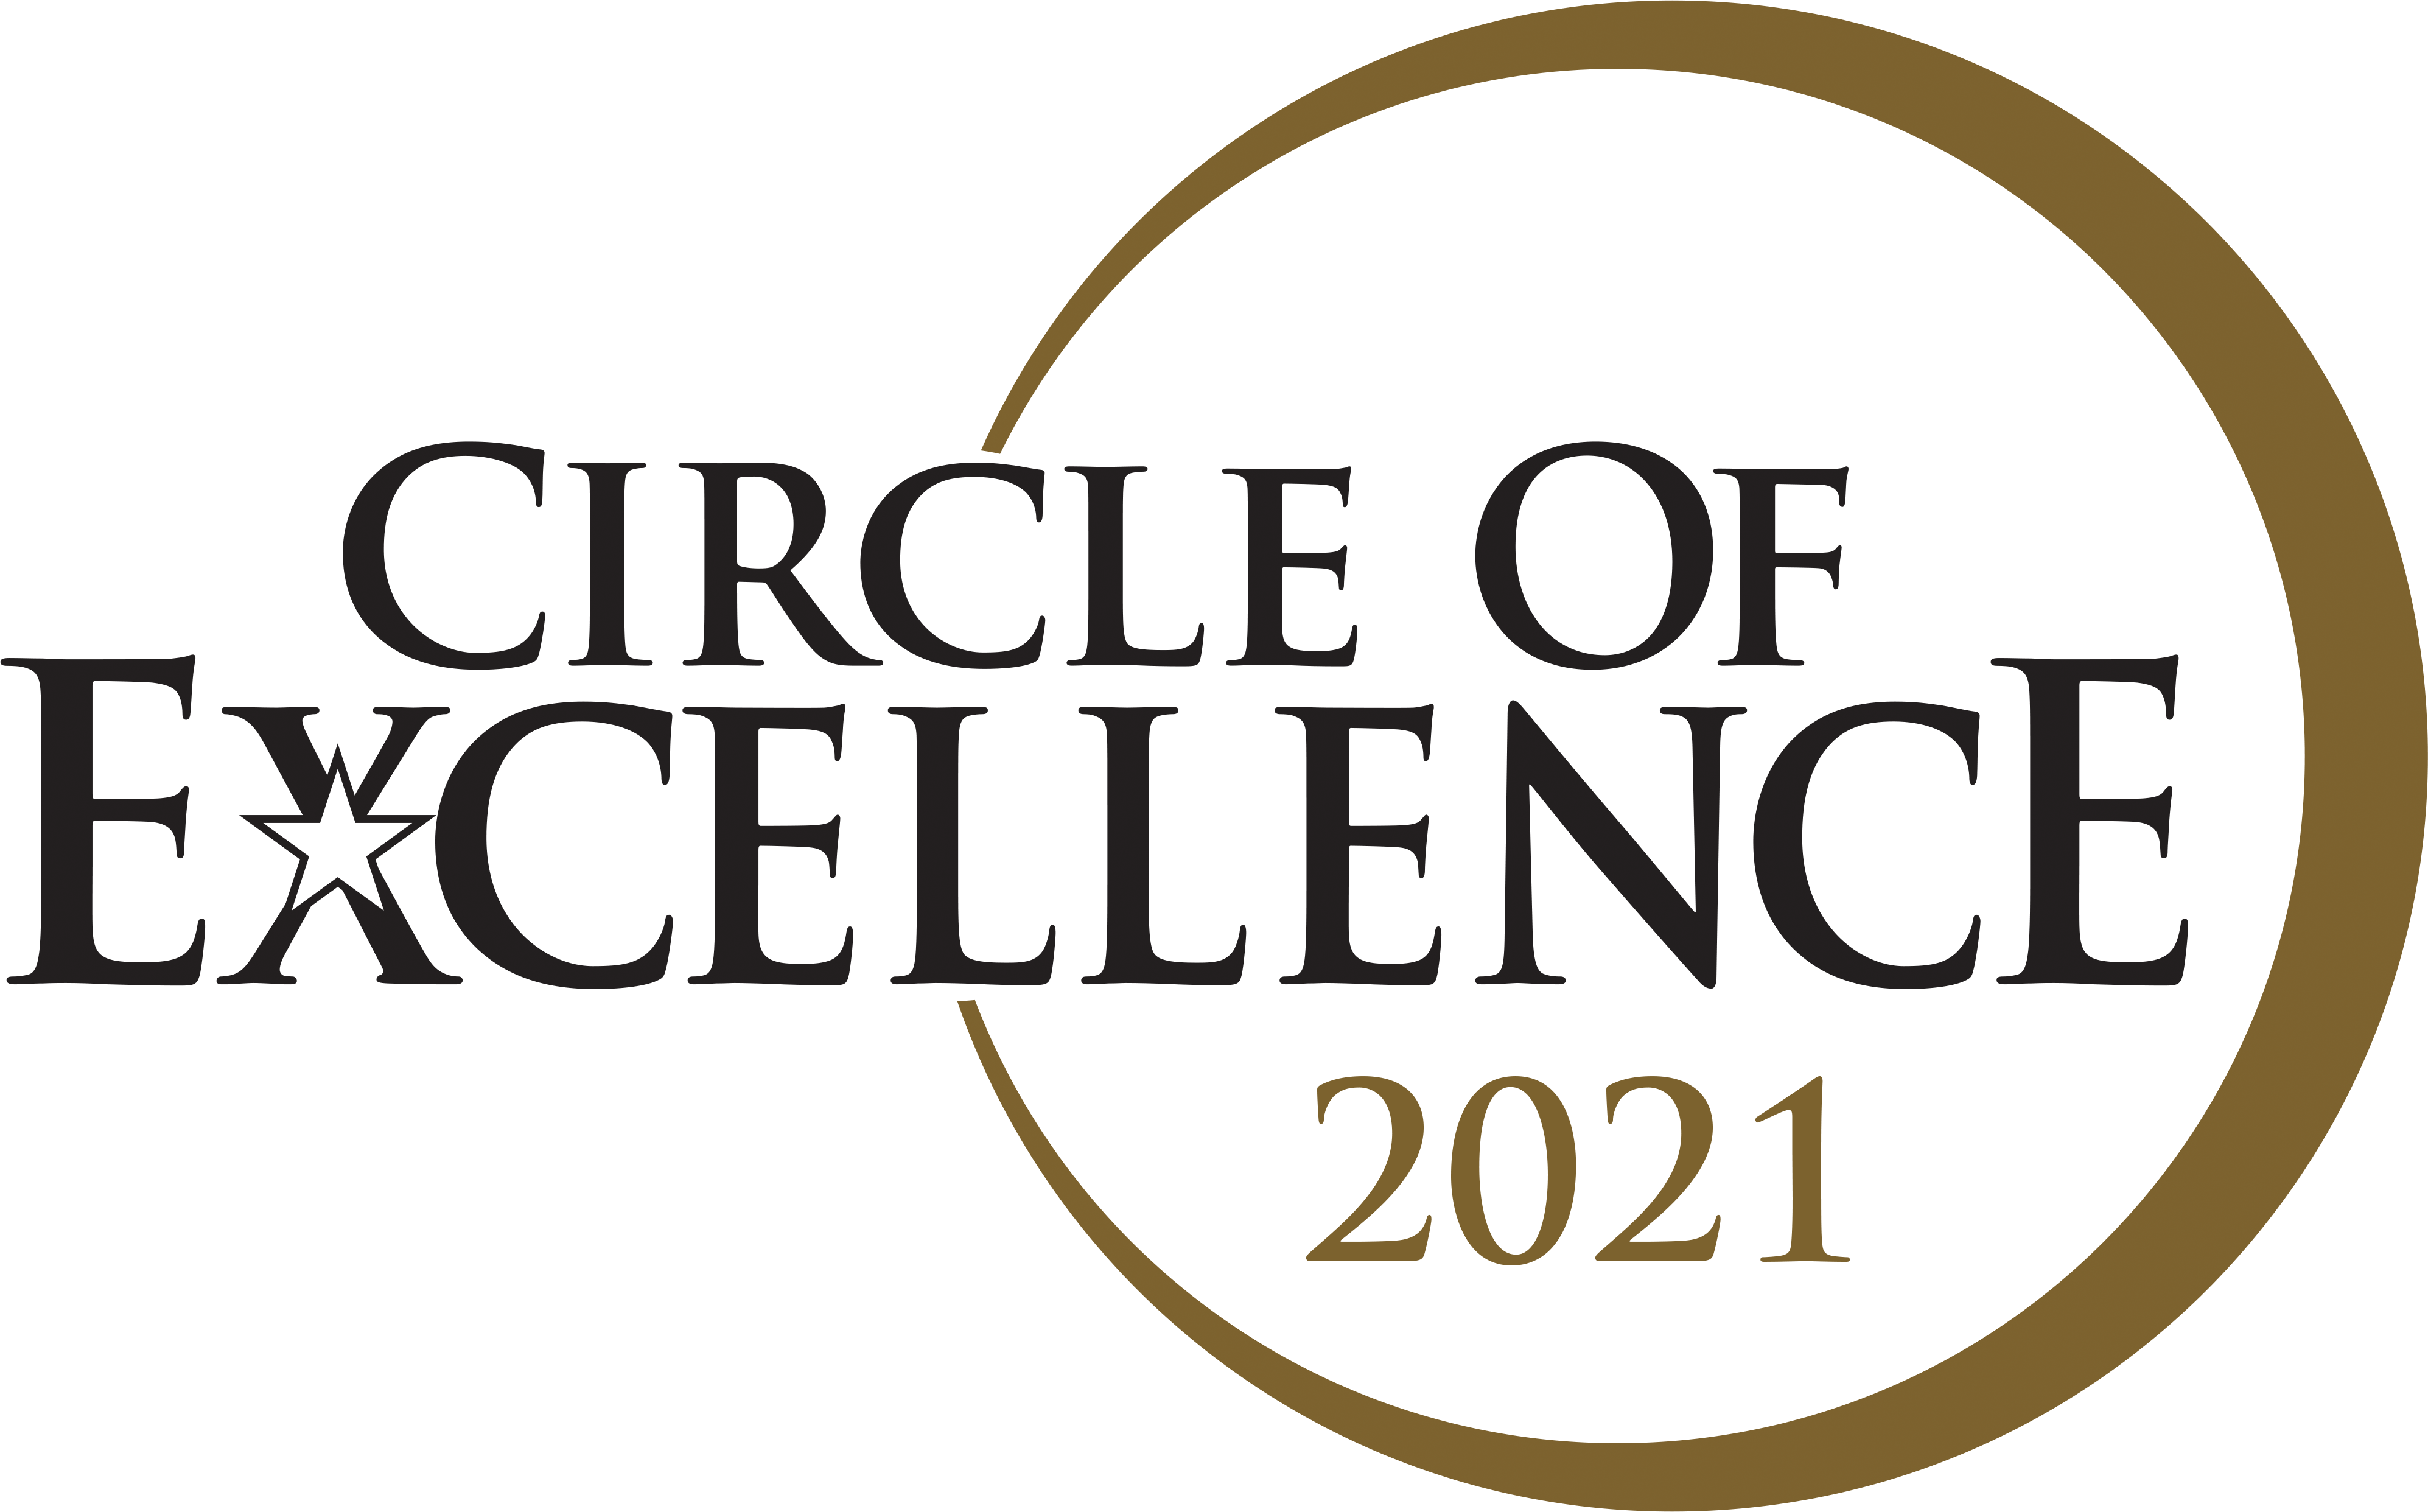 CircleOfExcellence_CABR_2021-color